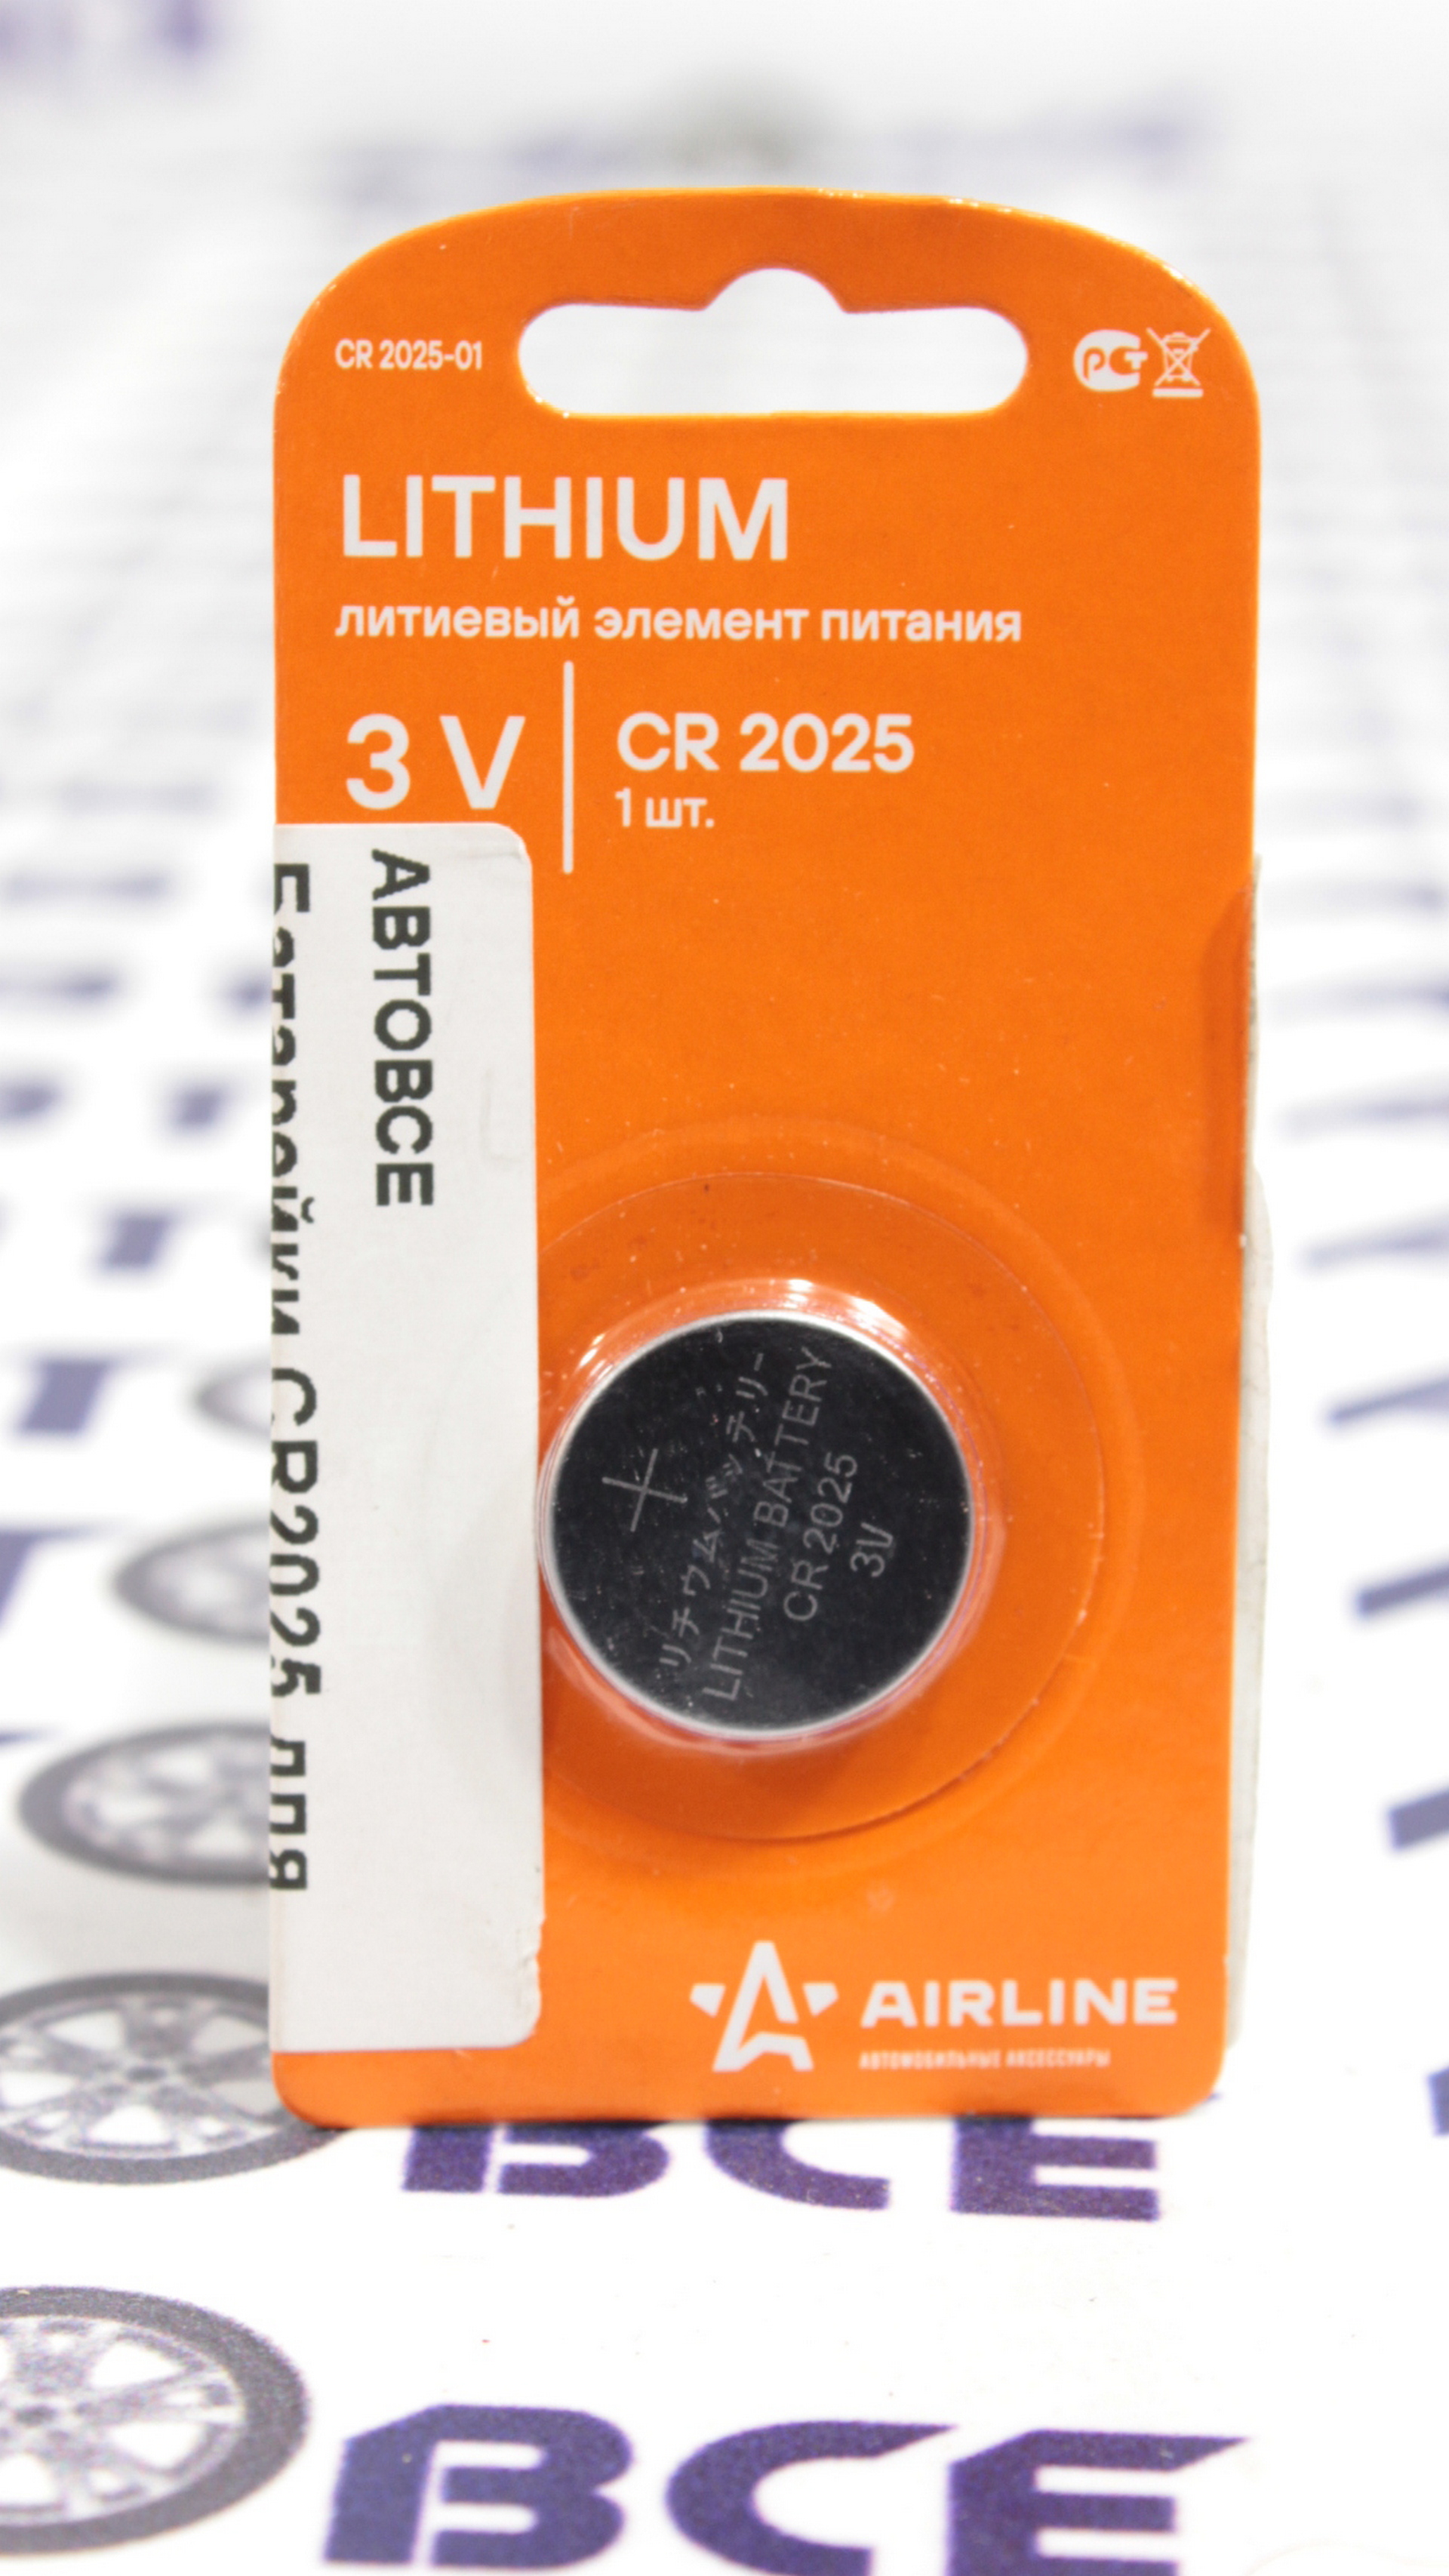 Батарейки CR2025 для брелоков литиевая 3V AIRLINE